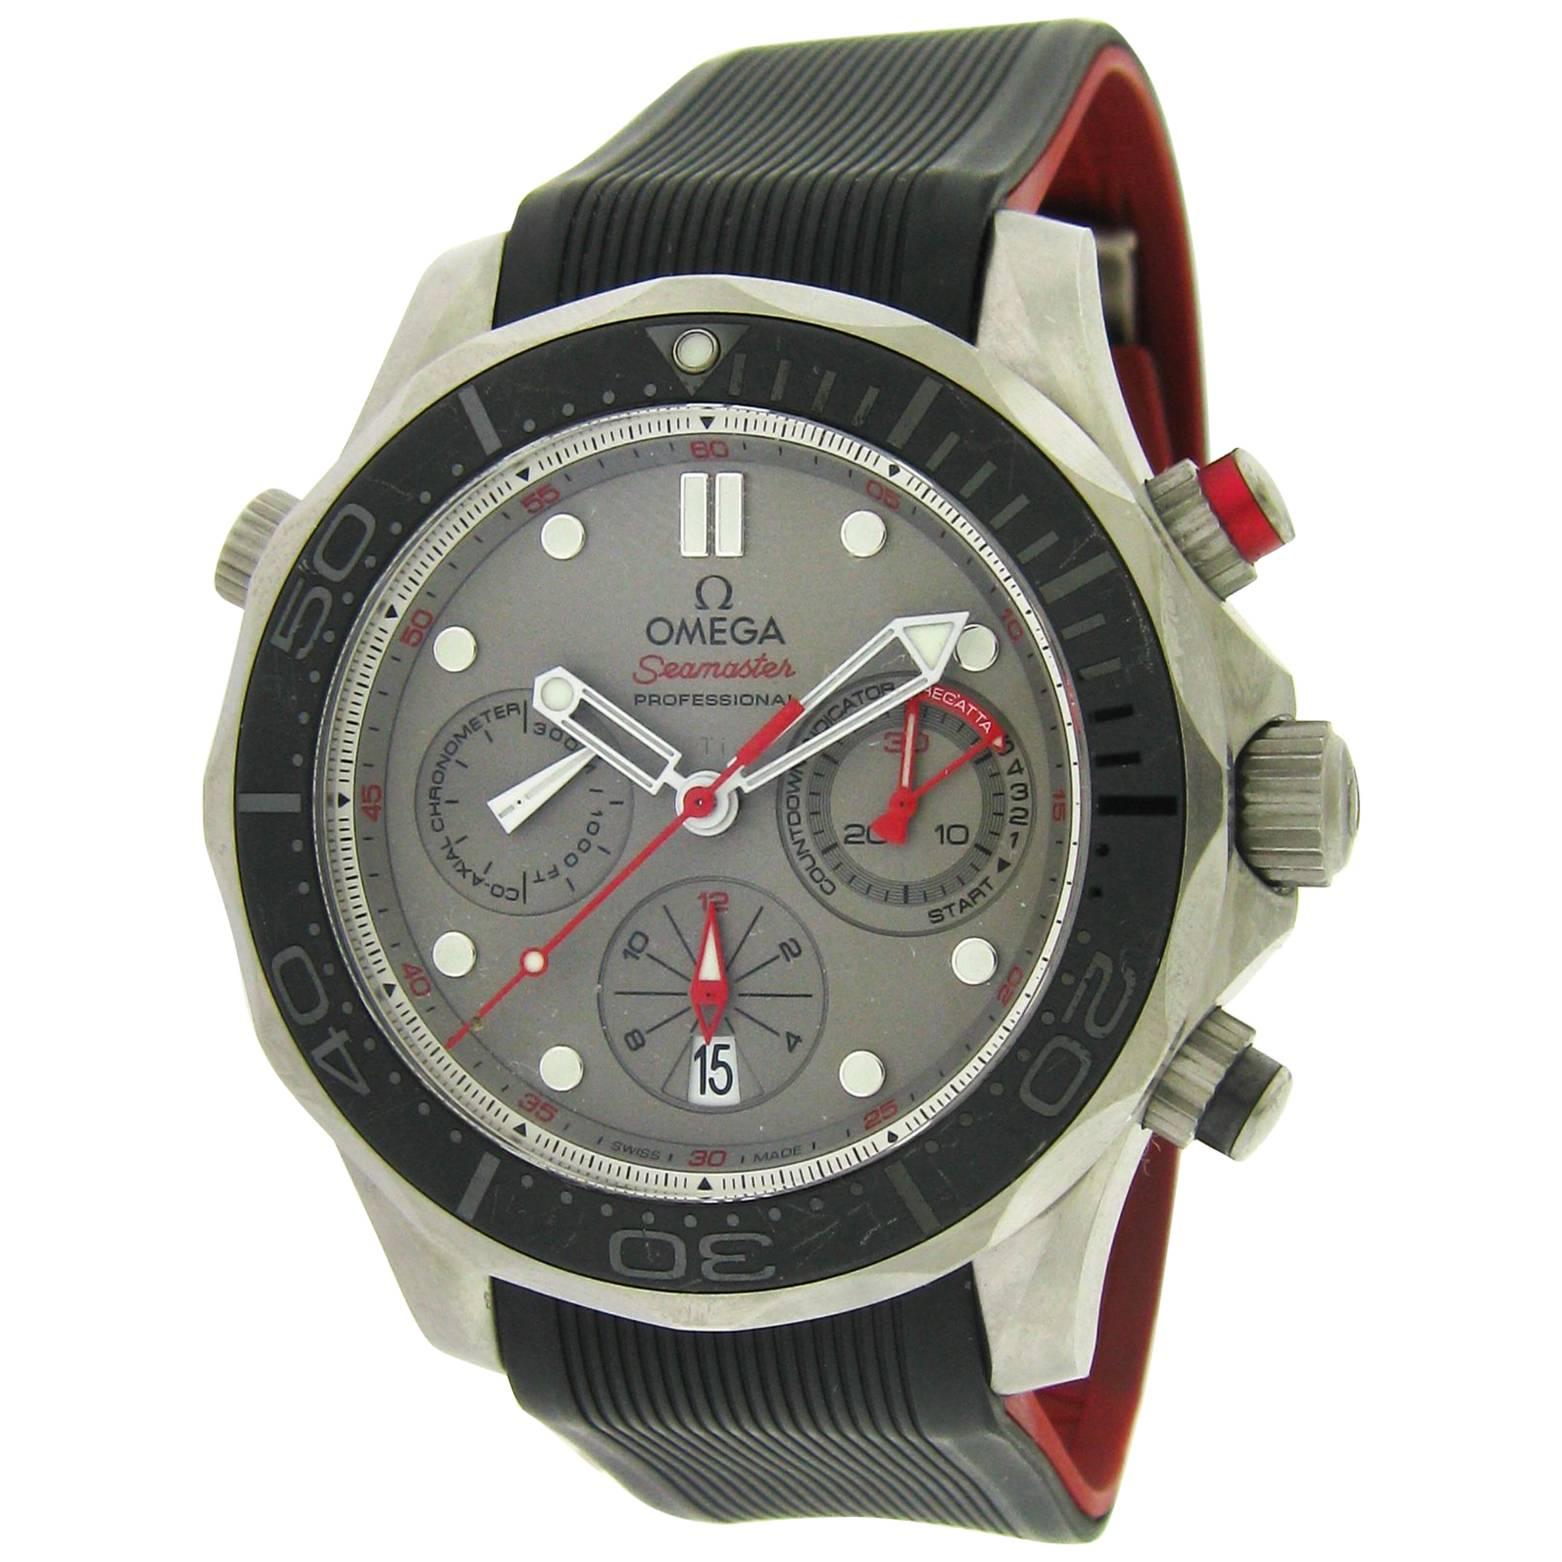 Omega Titanium Seamaster Professional Diver Chronograph Self-Winding Wristwatch